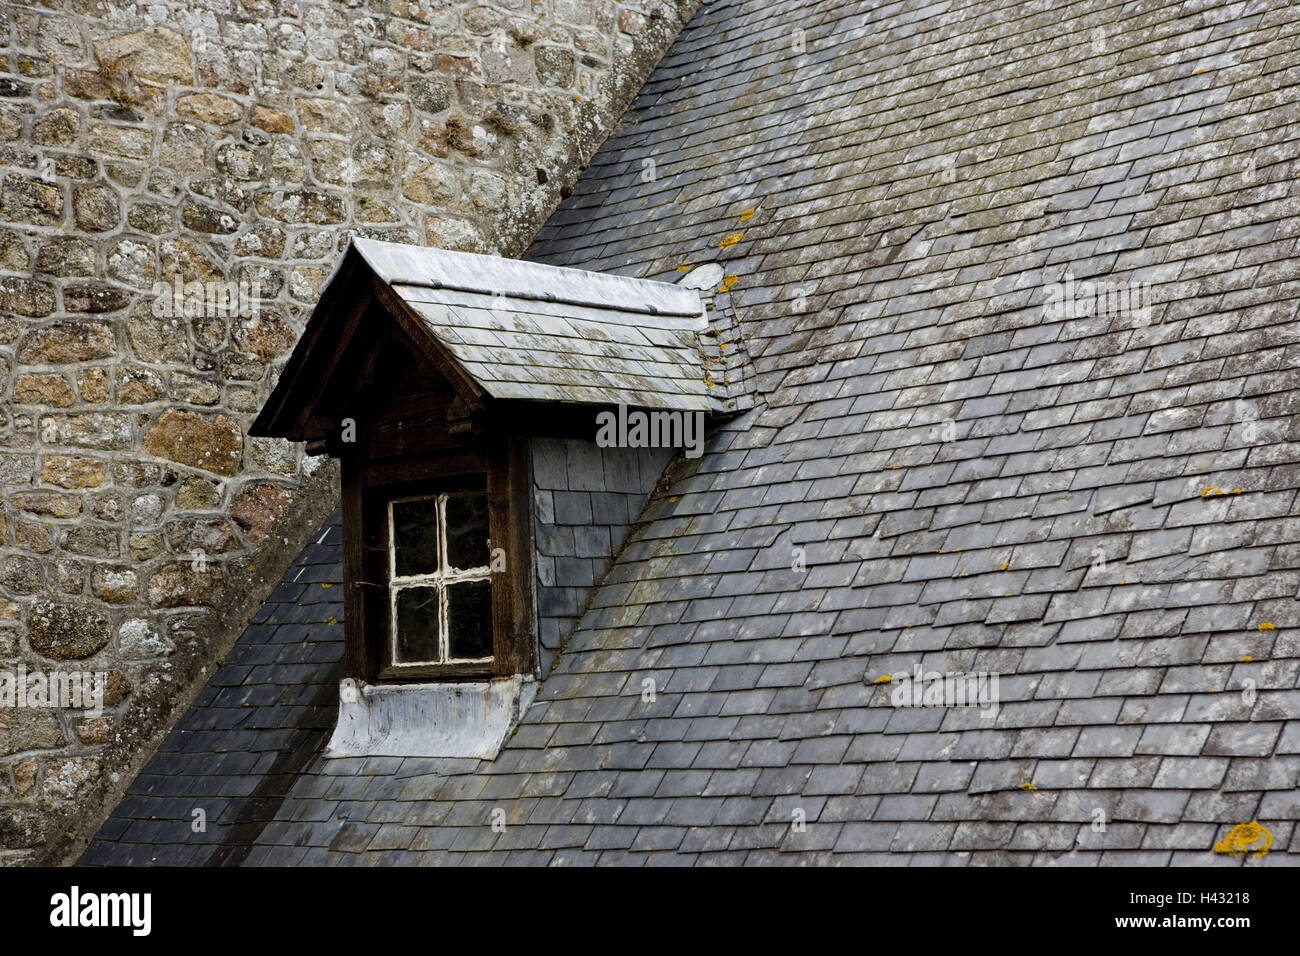 House roof, detail, dormer, window, Stock Photo